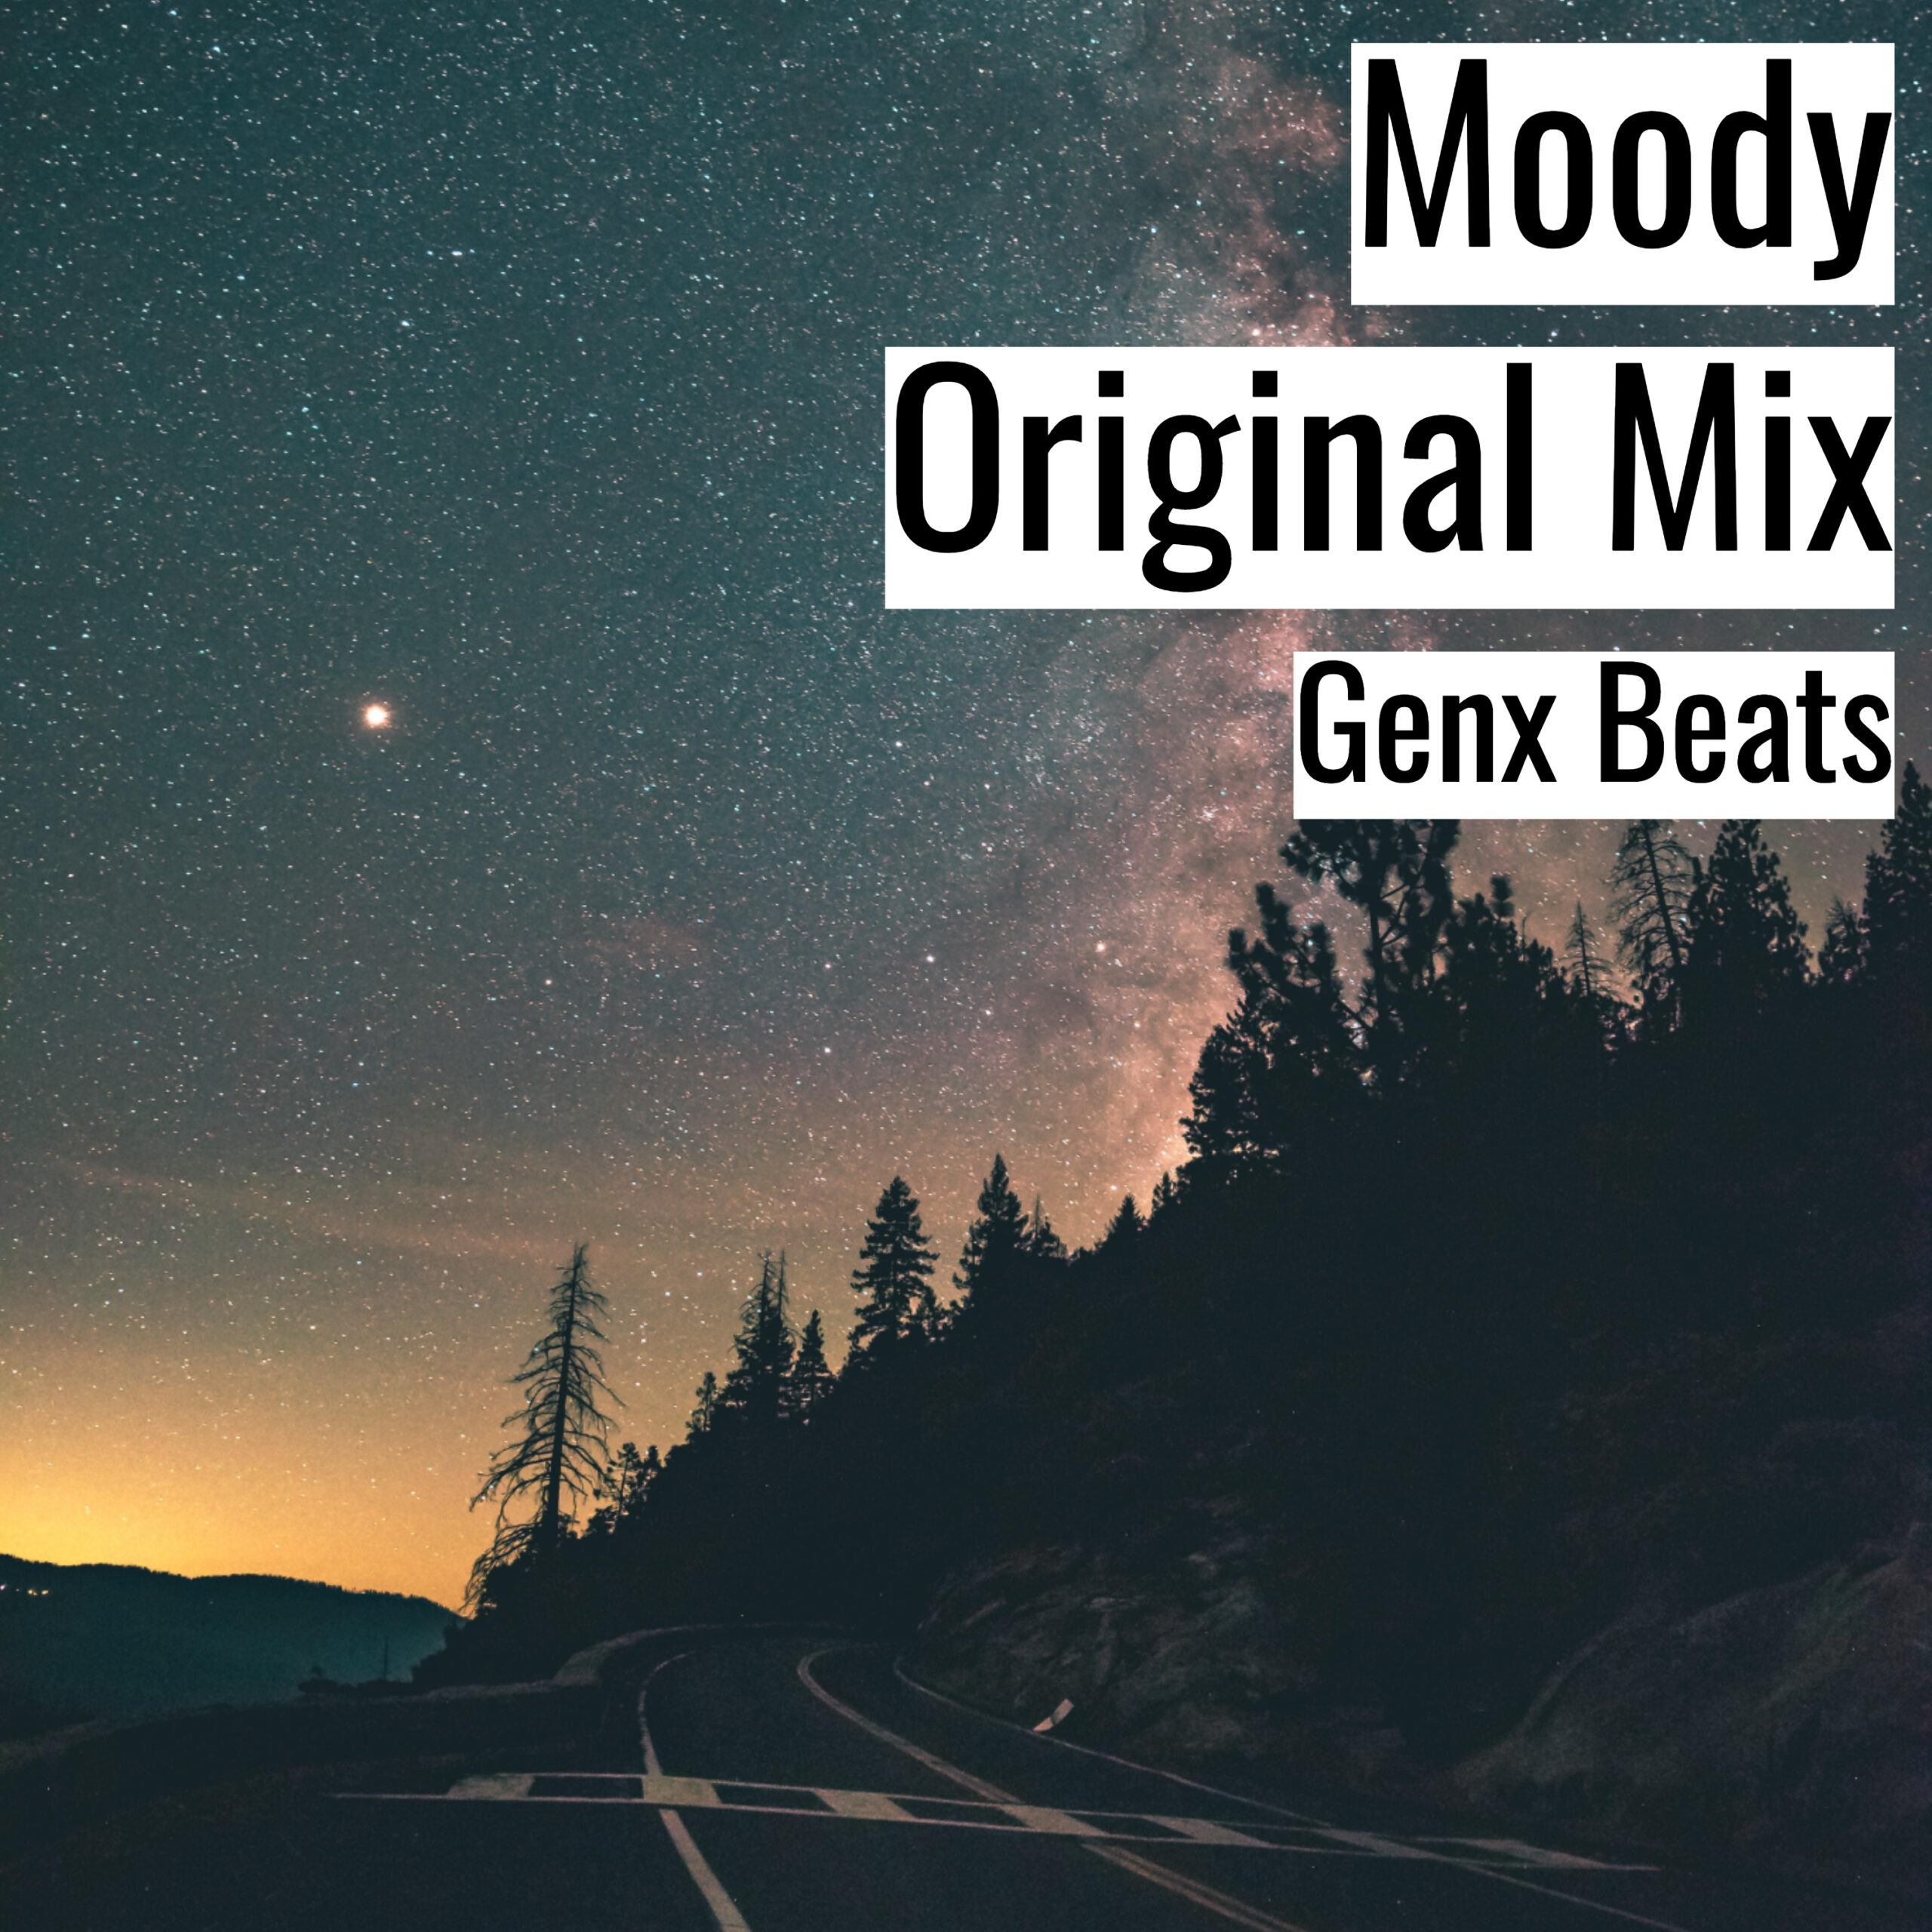 Moody Original Mix scaled